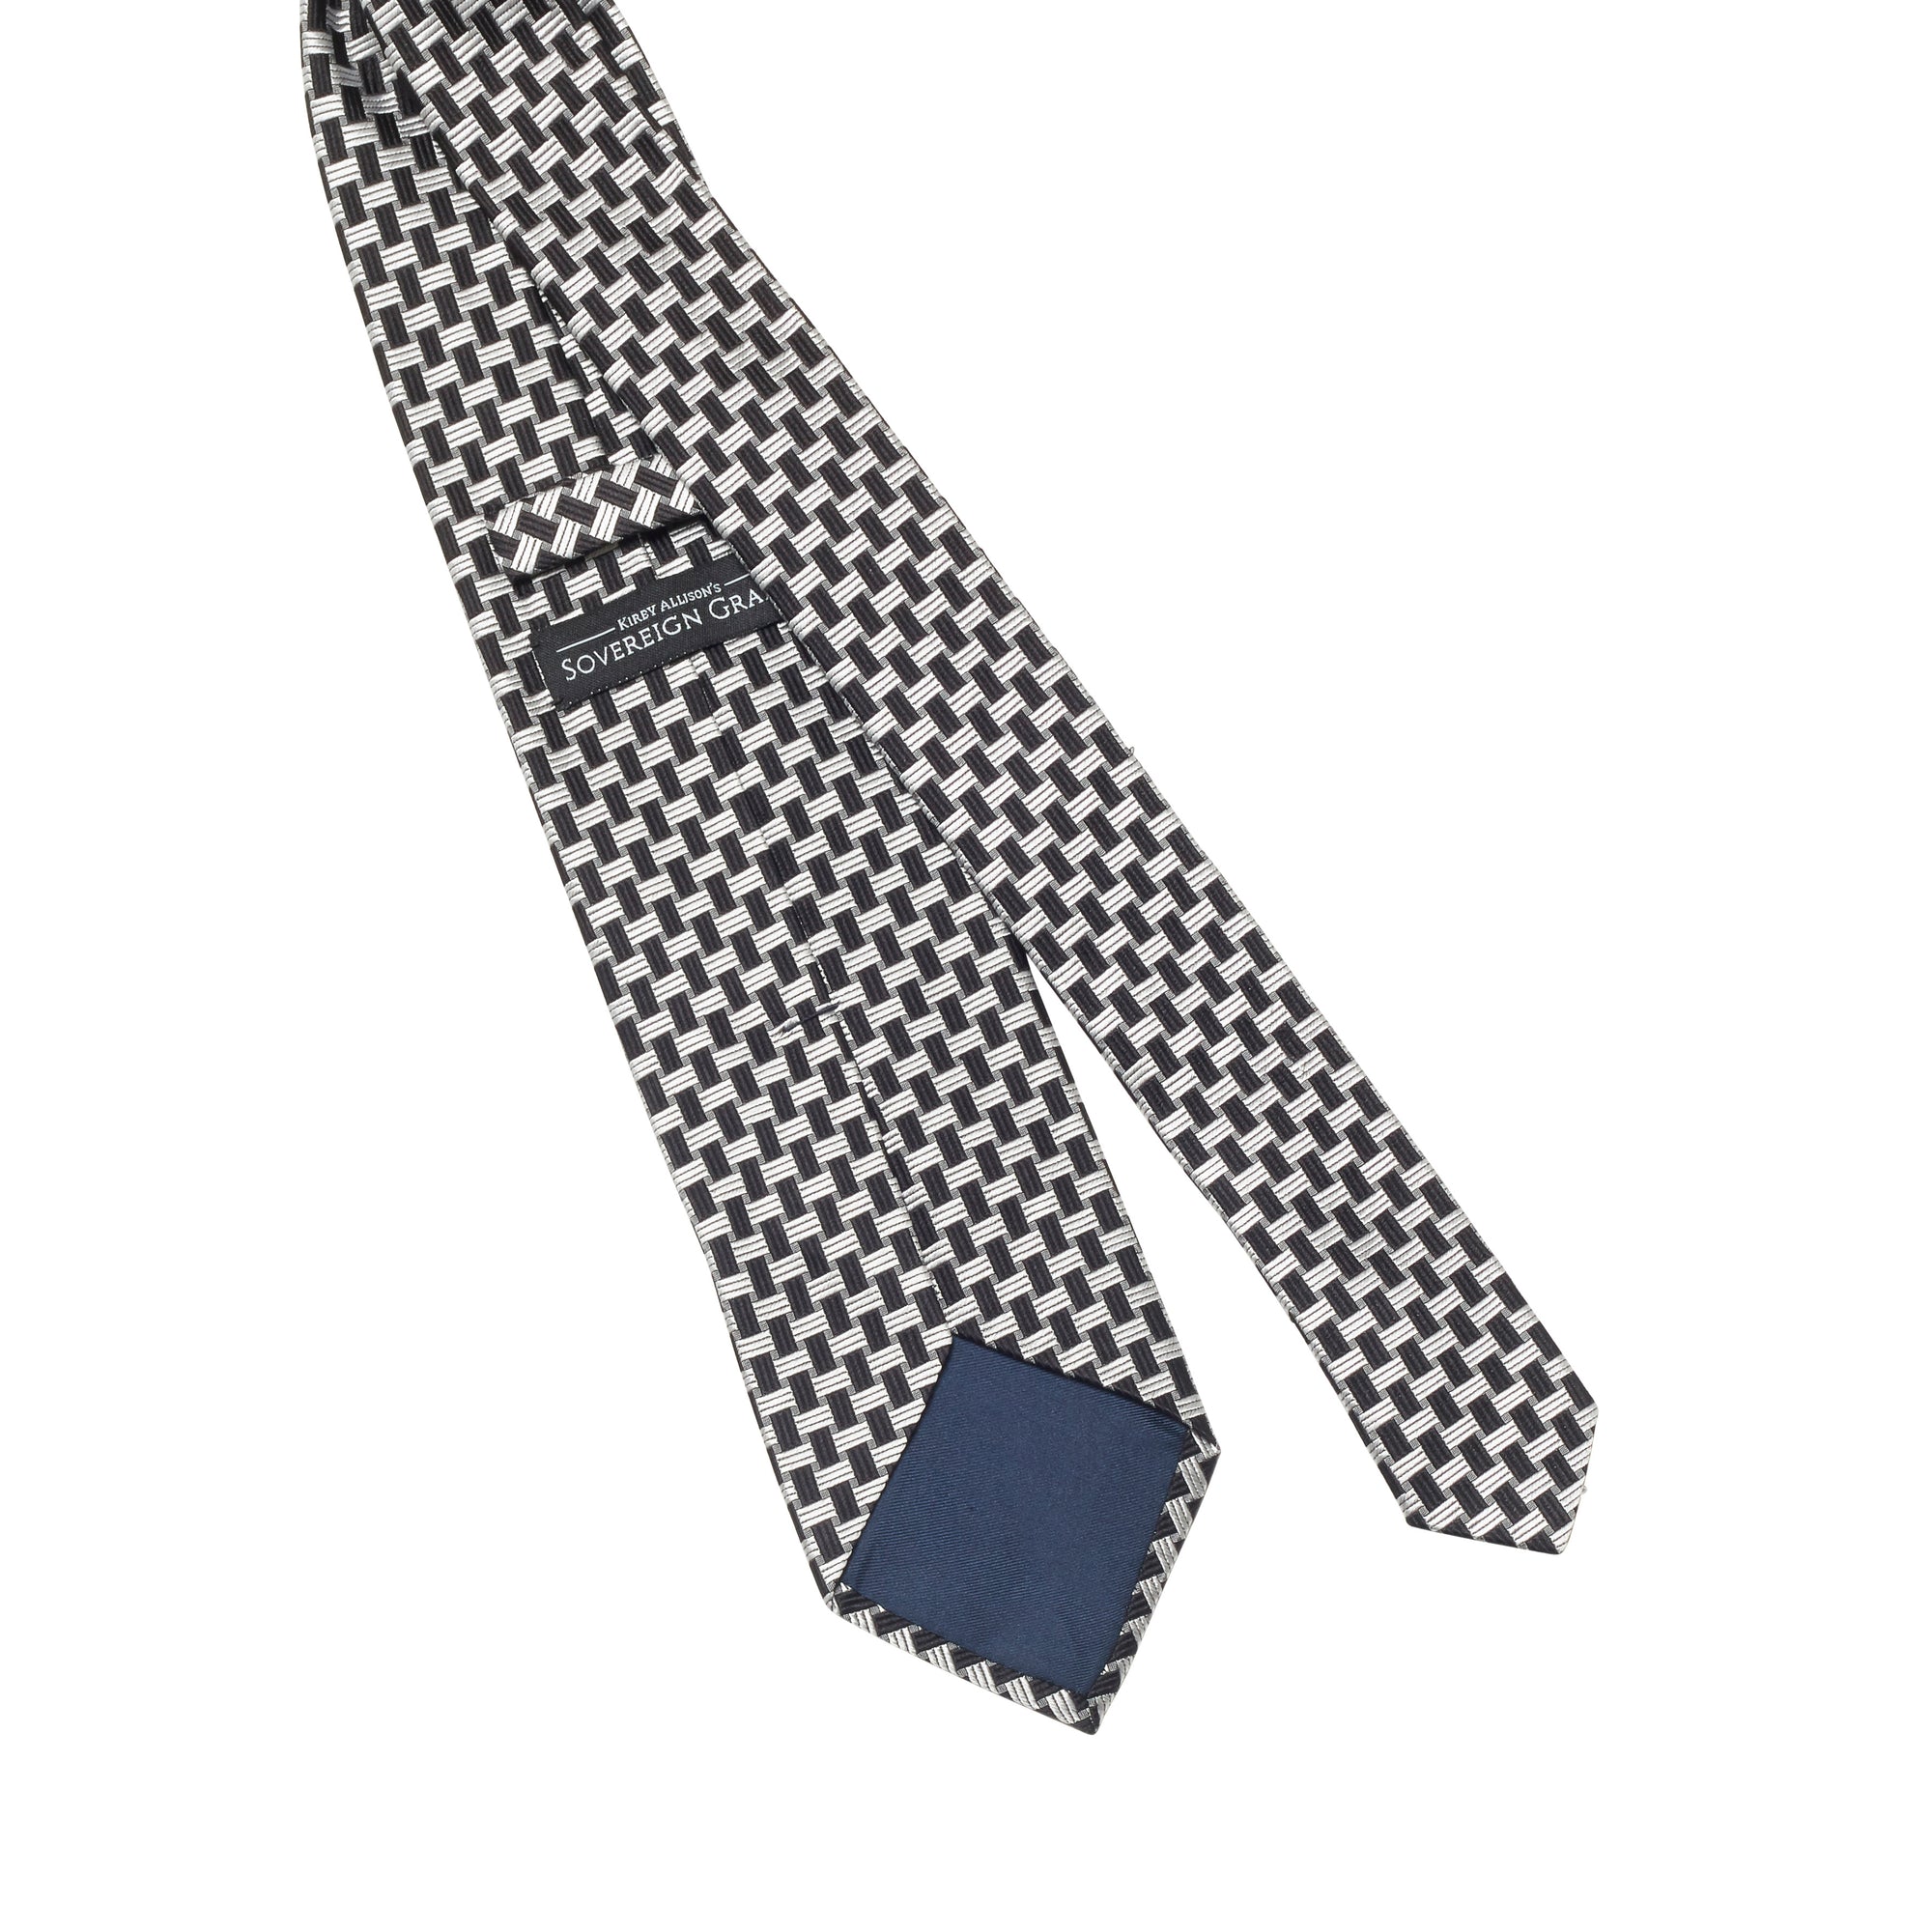 A high-quality handmade checkered tie, the Sovereign Grade Basket Weave Silk Tie by KirbyAllison.com - United Kingdom.